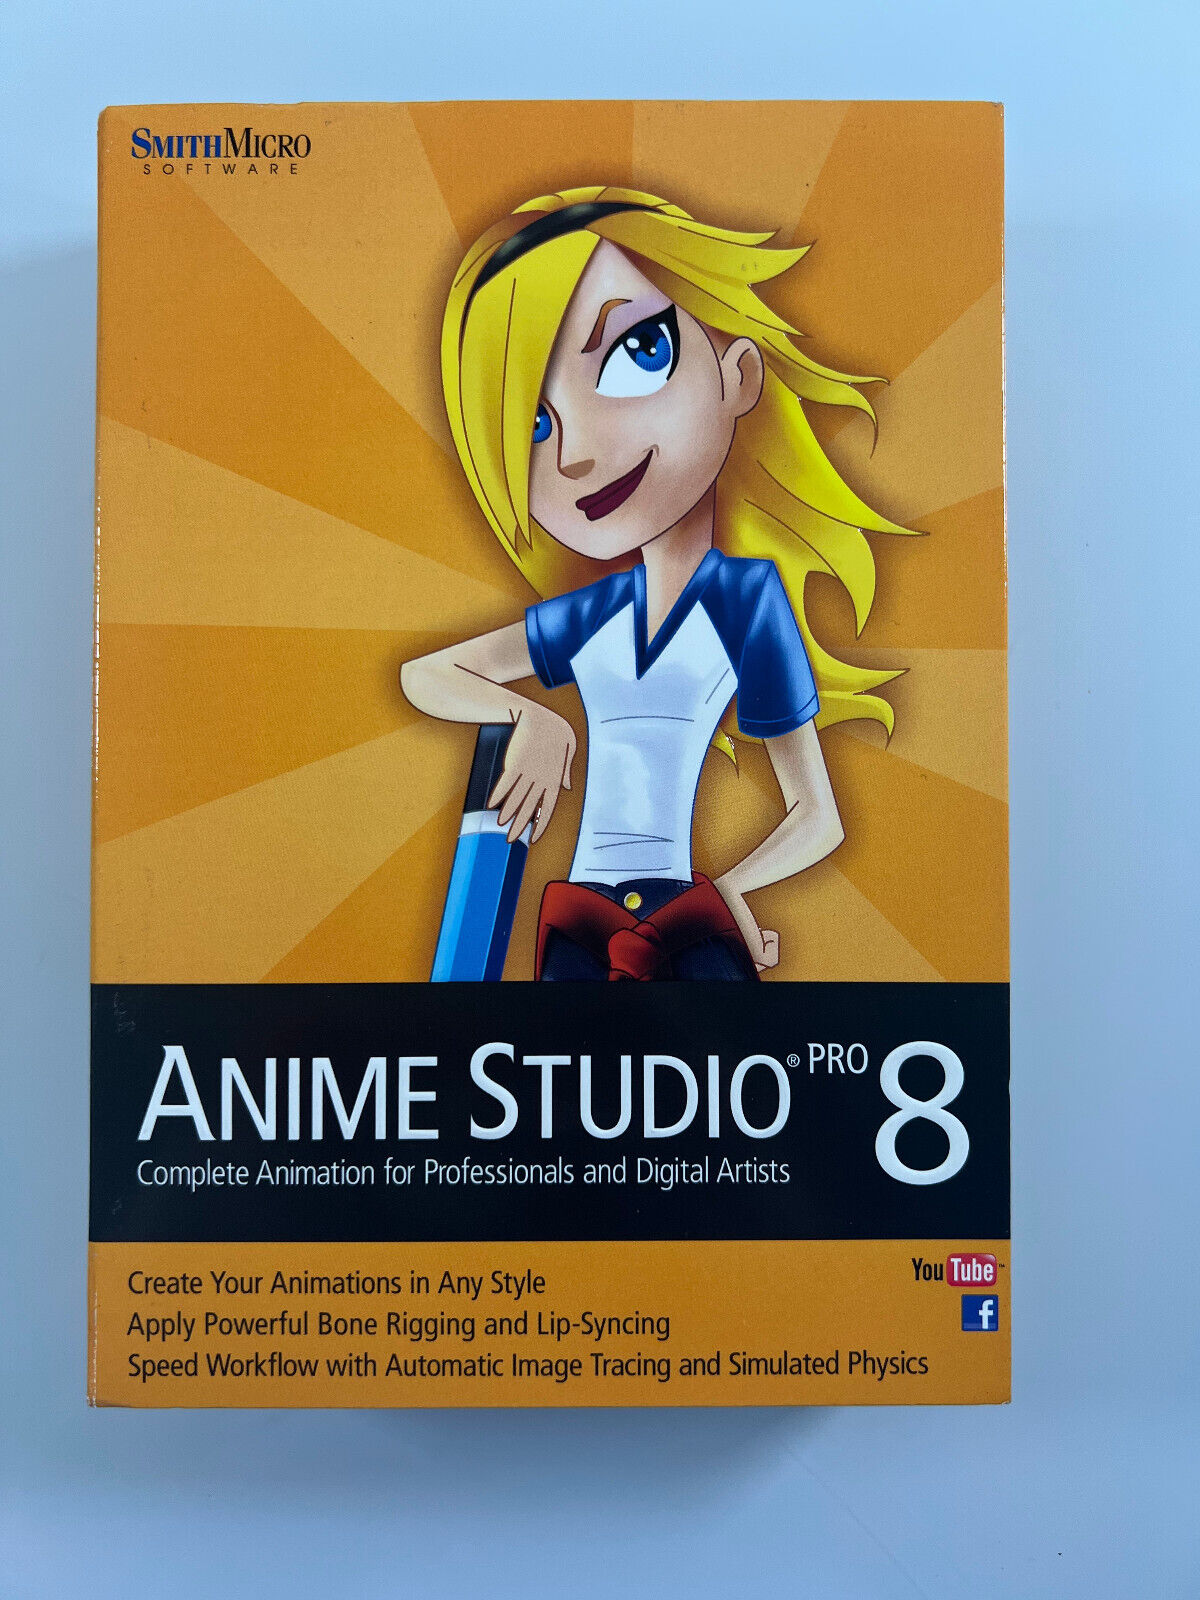 SmithMicro Software Animae Studio Pro 8 | eBay